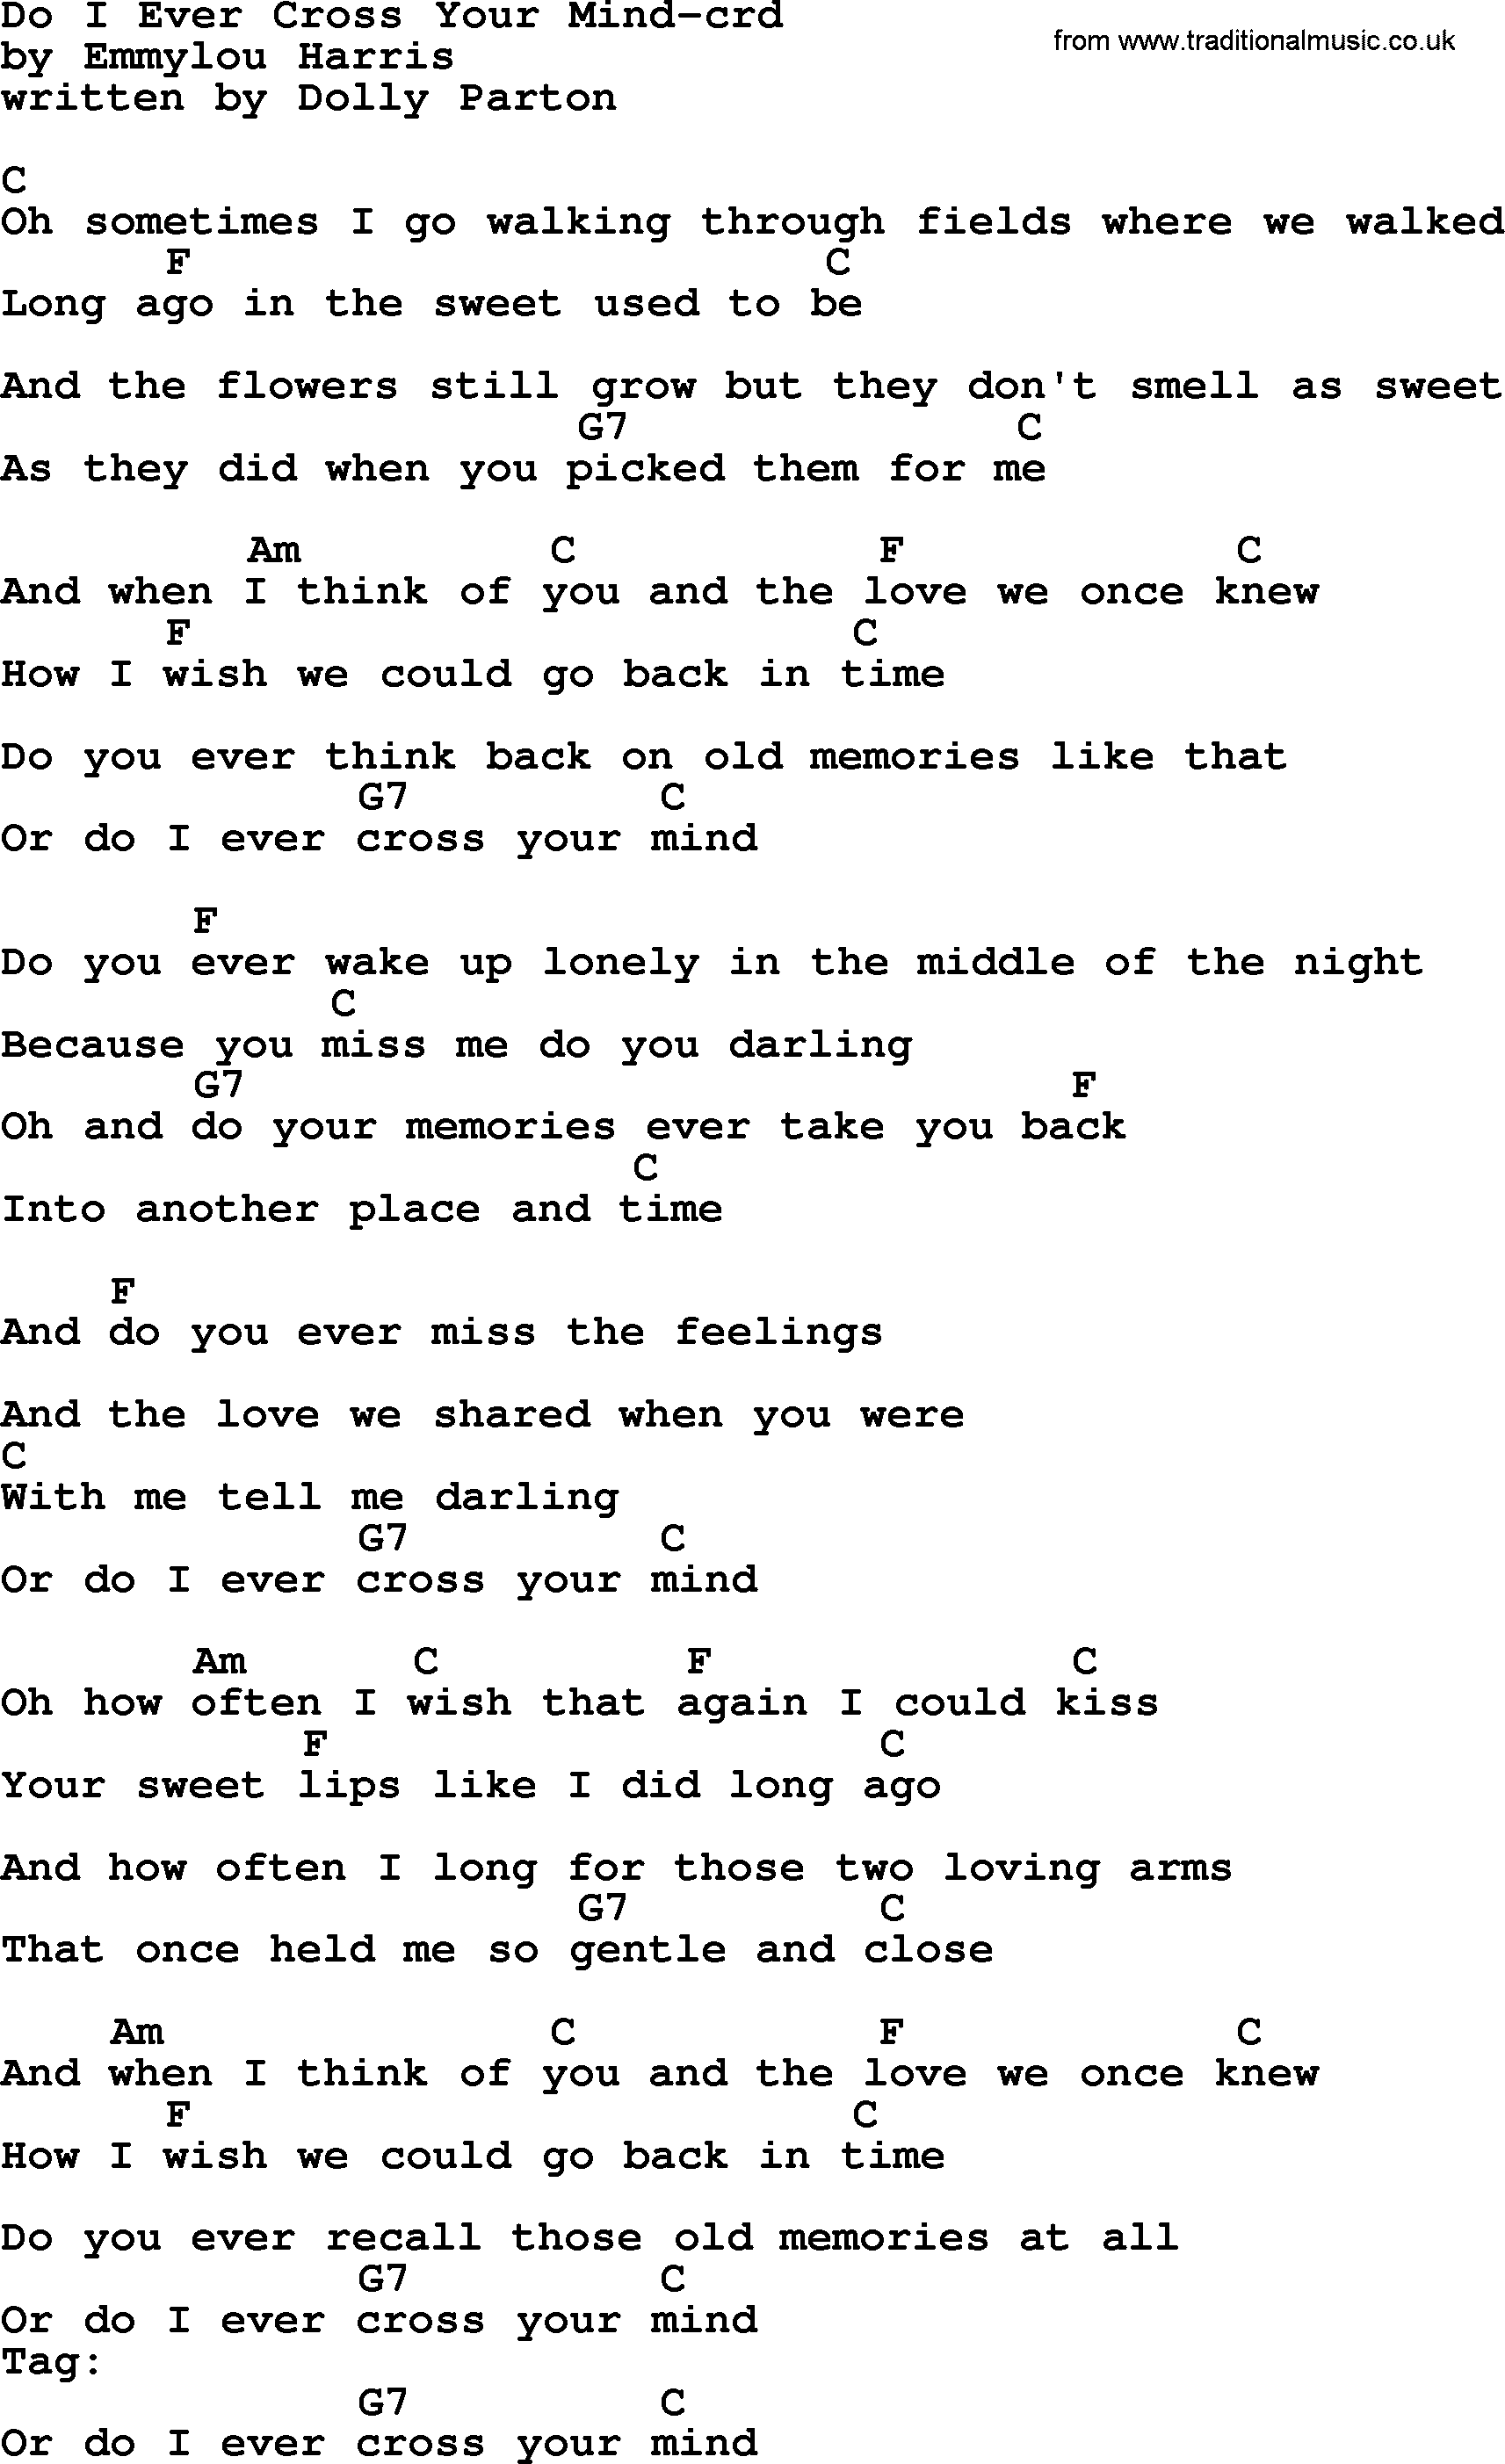 Emmylou Harris song: Do I Ever Cross Your Mind lyrics and chords